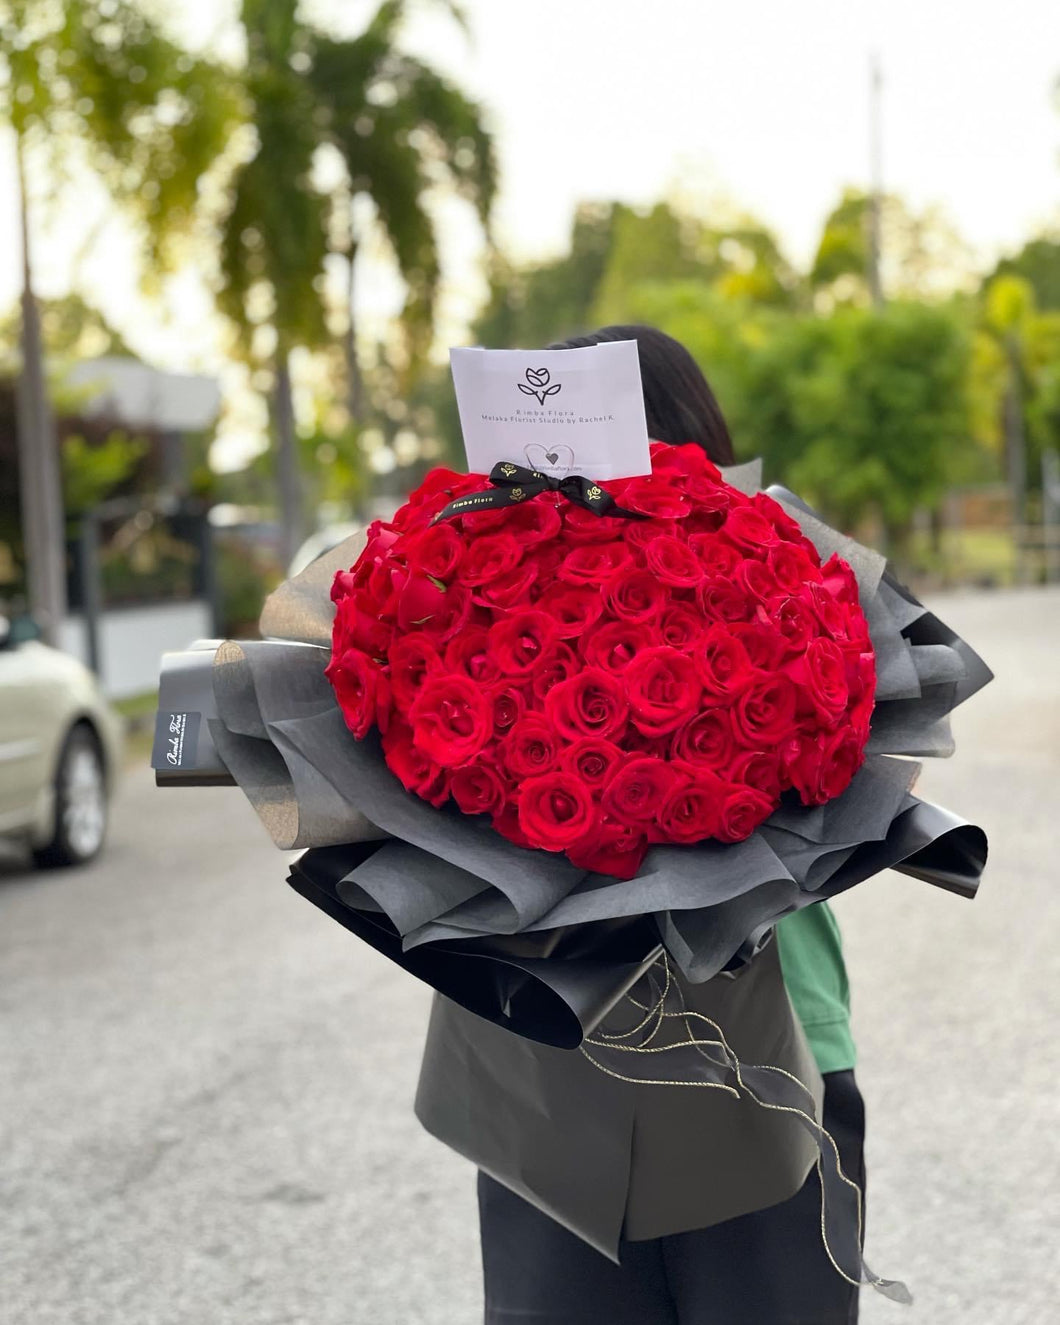 Prestige XXXL Size Bouquet To You (99 Premium Red Roses Design)